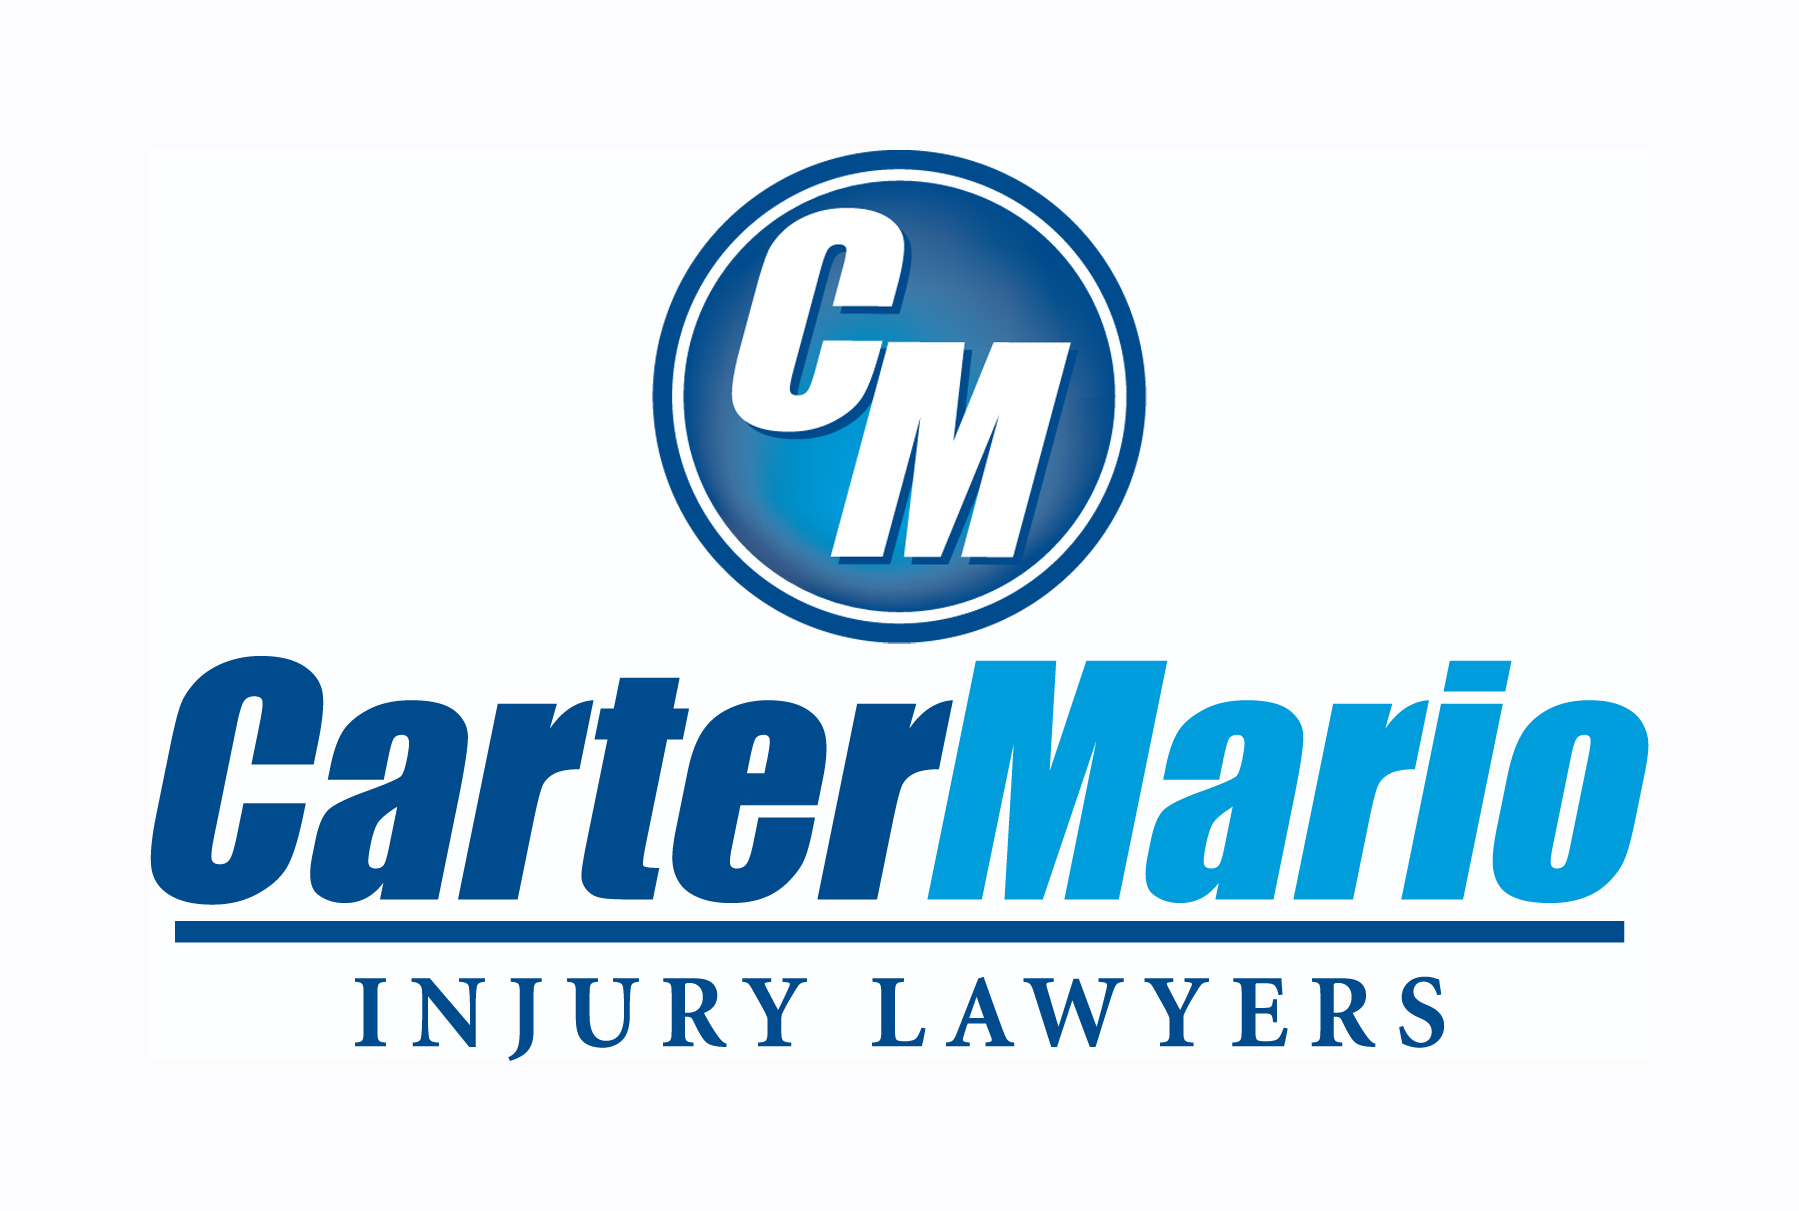 Carter Mario Injury Lawyers Profile Image